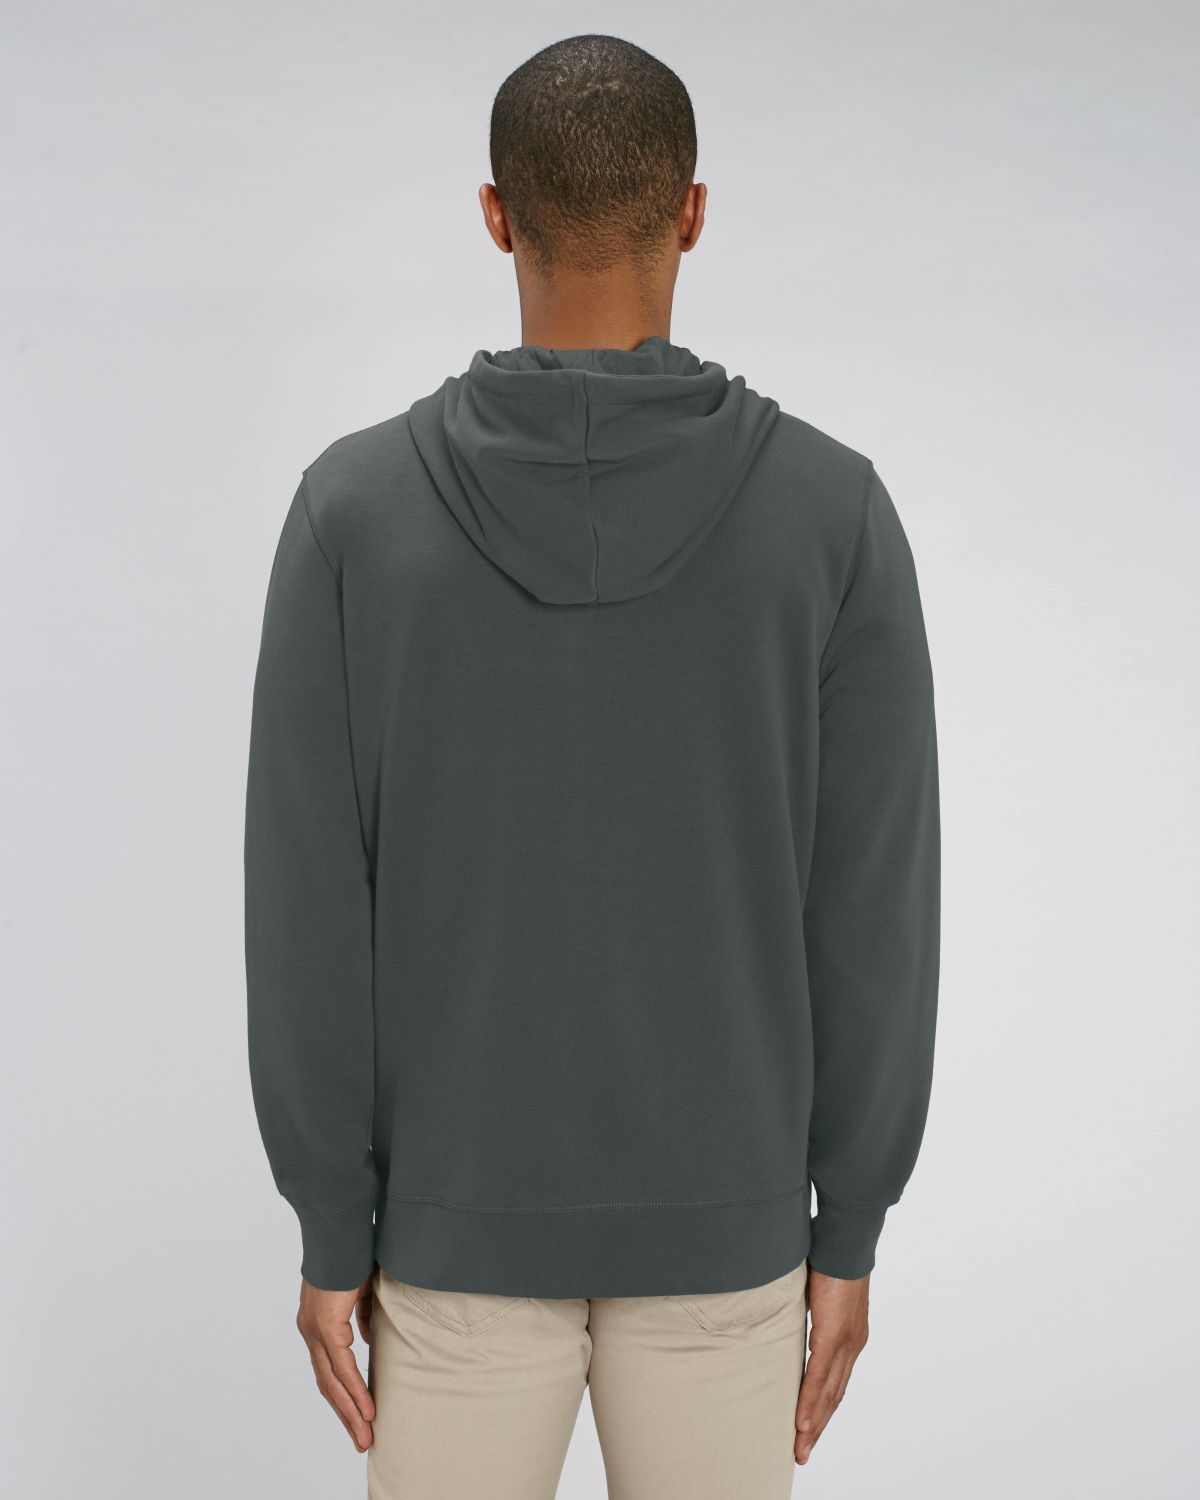 Stanley/Stella's - Connector Sweater (Zip) - Anthracite